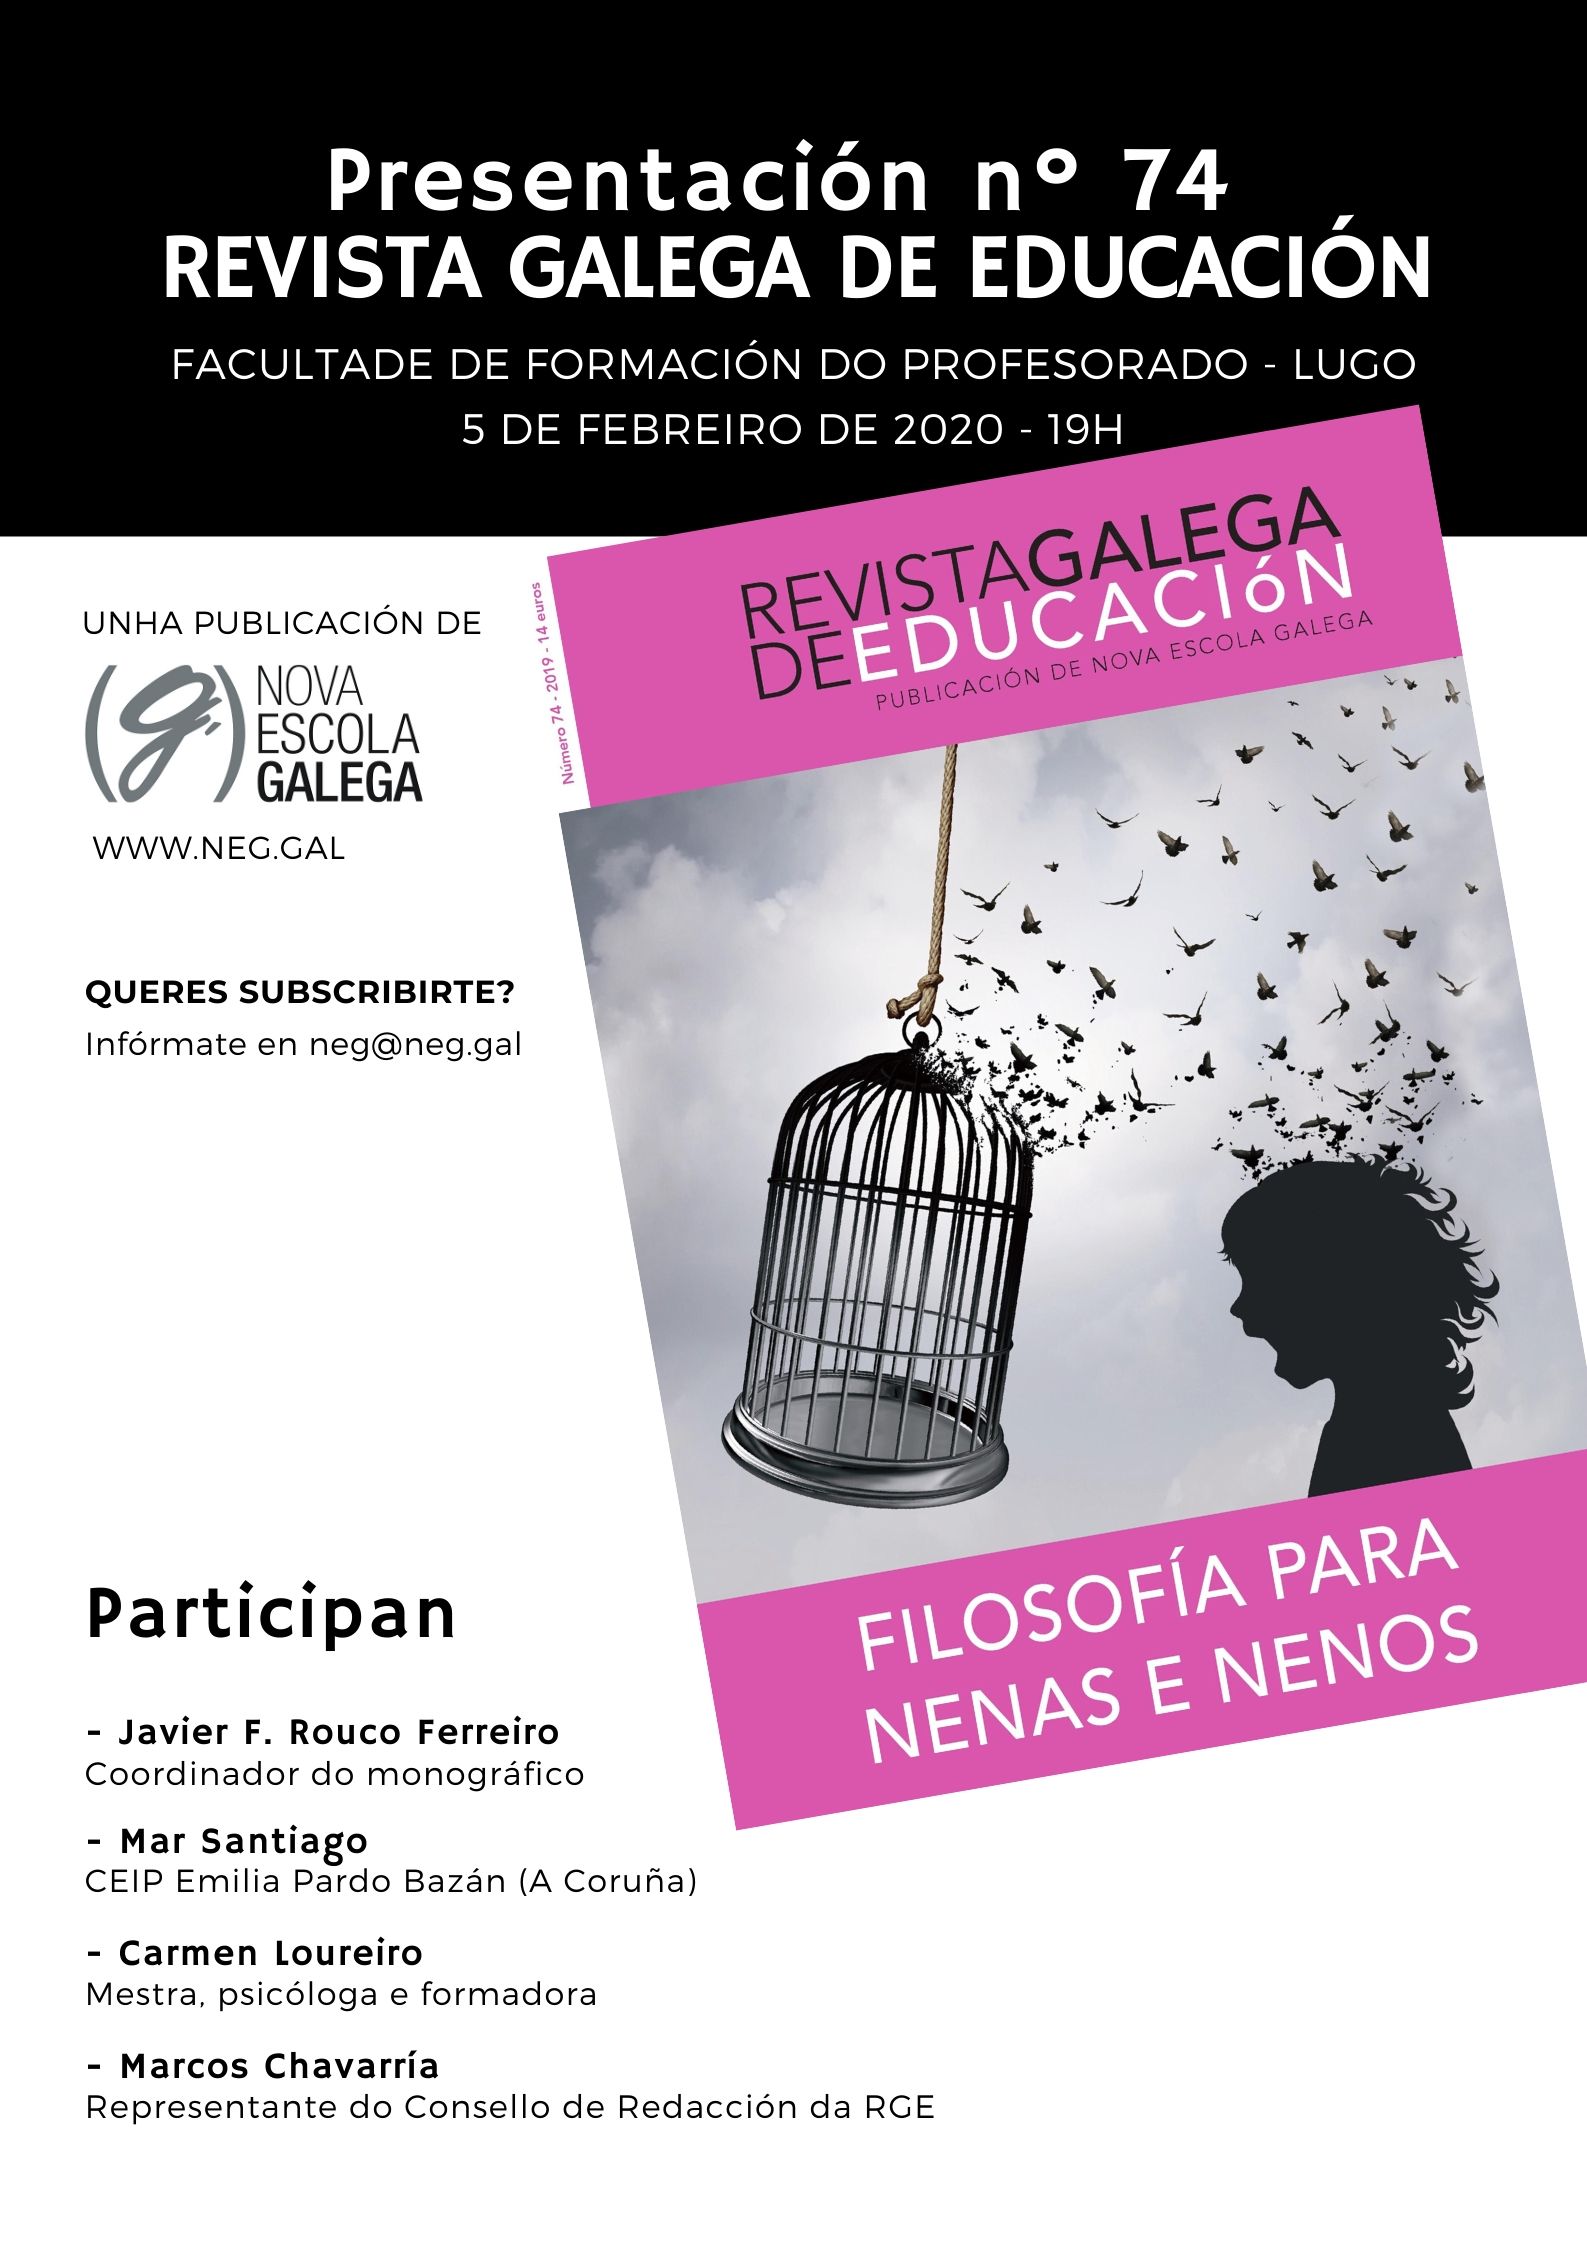 http://www.nova-escola-galega.org/almacen/documentos/Presentaci%C3%B3n%20n%C2%BA%2074%20Revista%20Galega%20de%20Educaci%C3%B3n_lugo%20(1).jpg